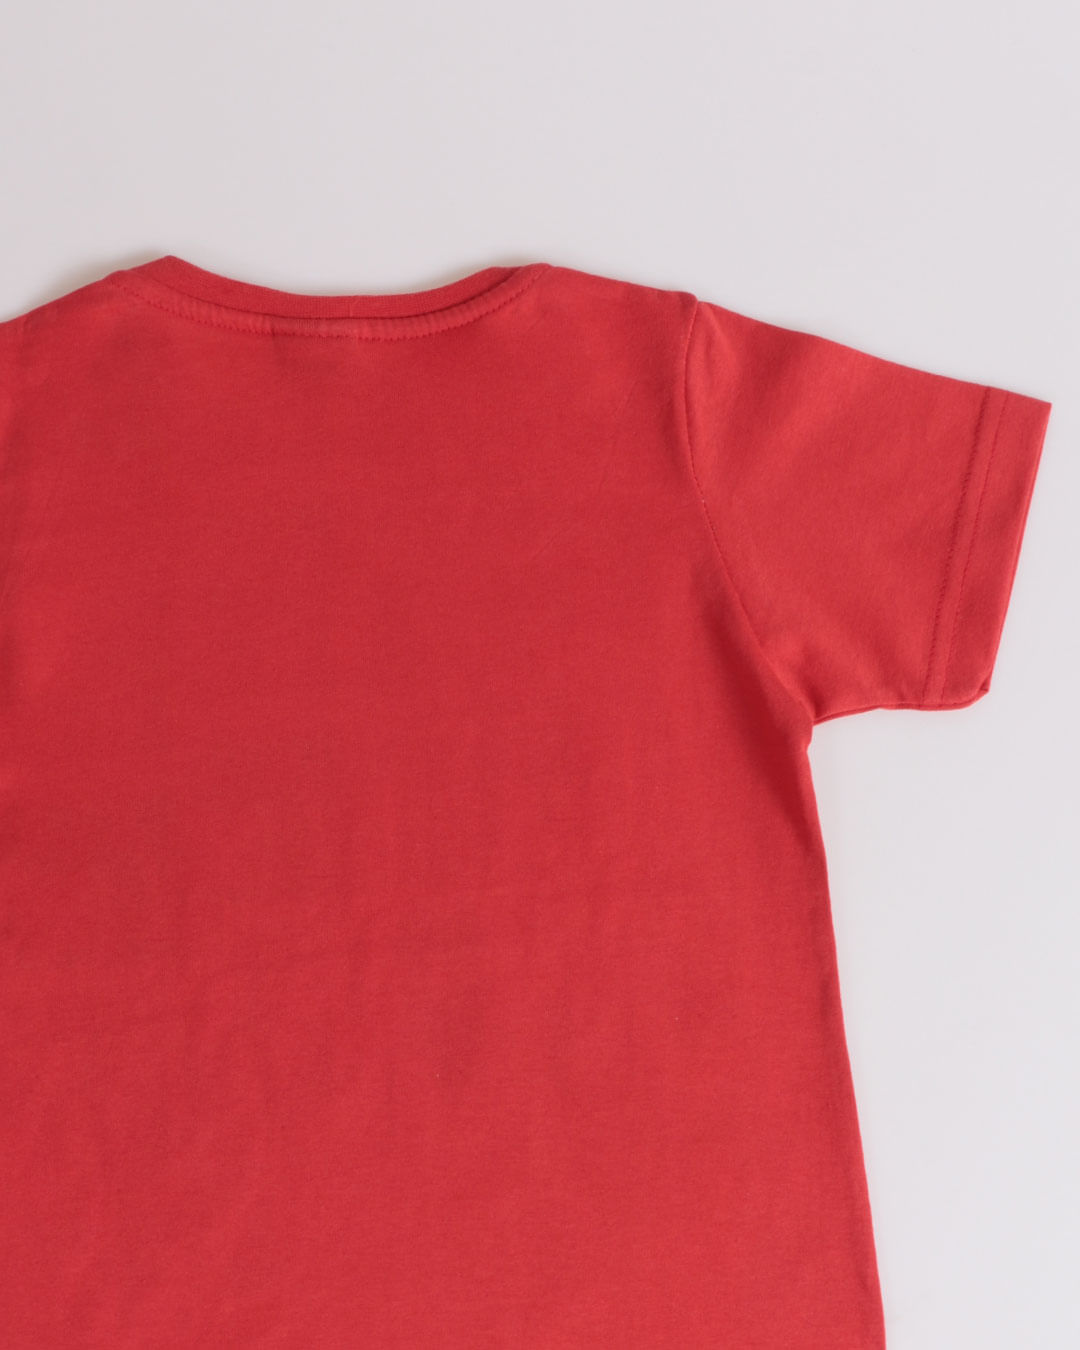 Camiseta-Bebe-Estampa-Frontal-Vermelha